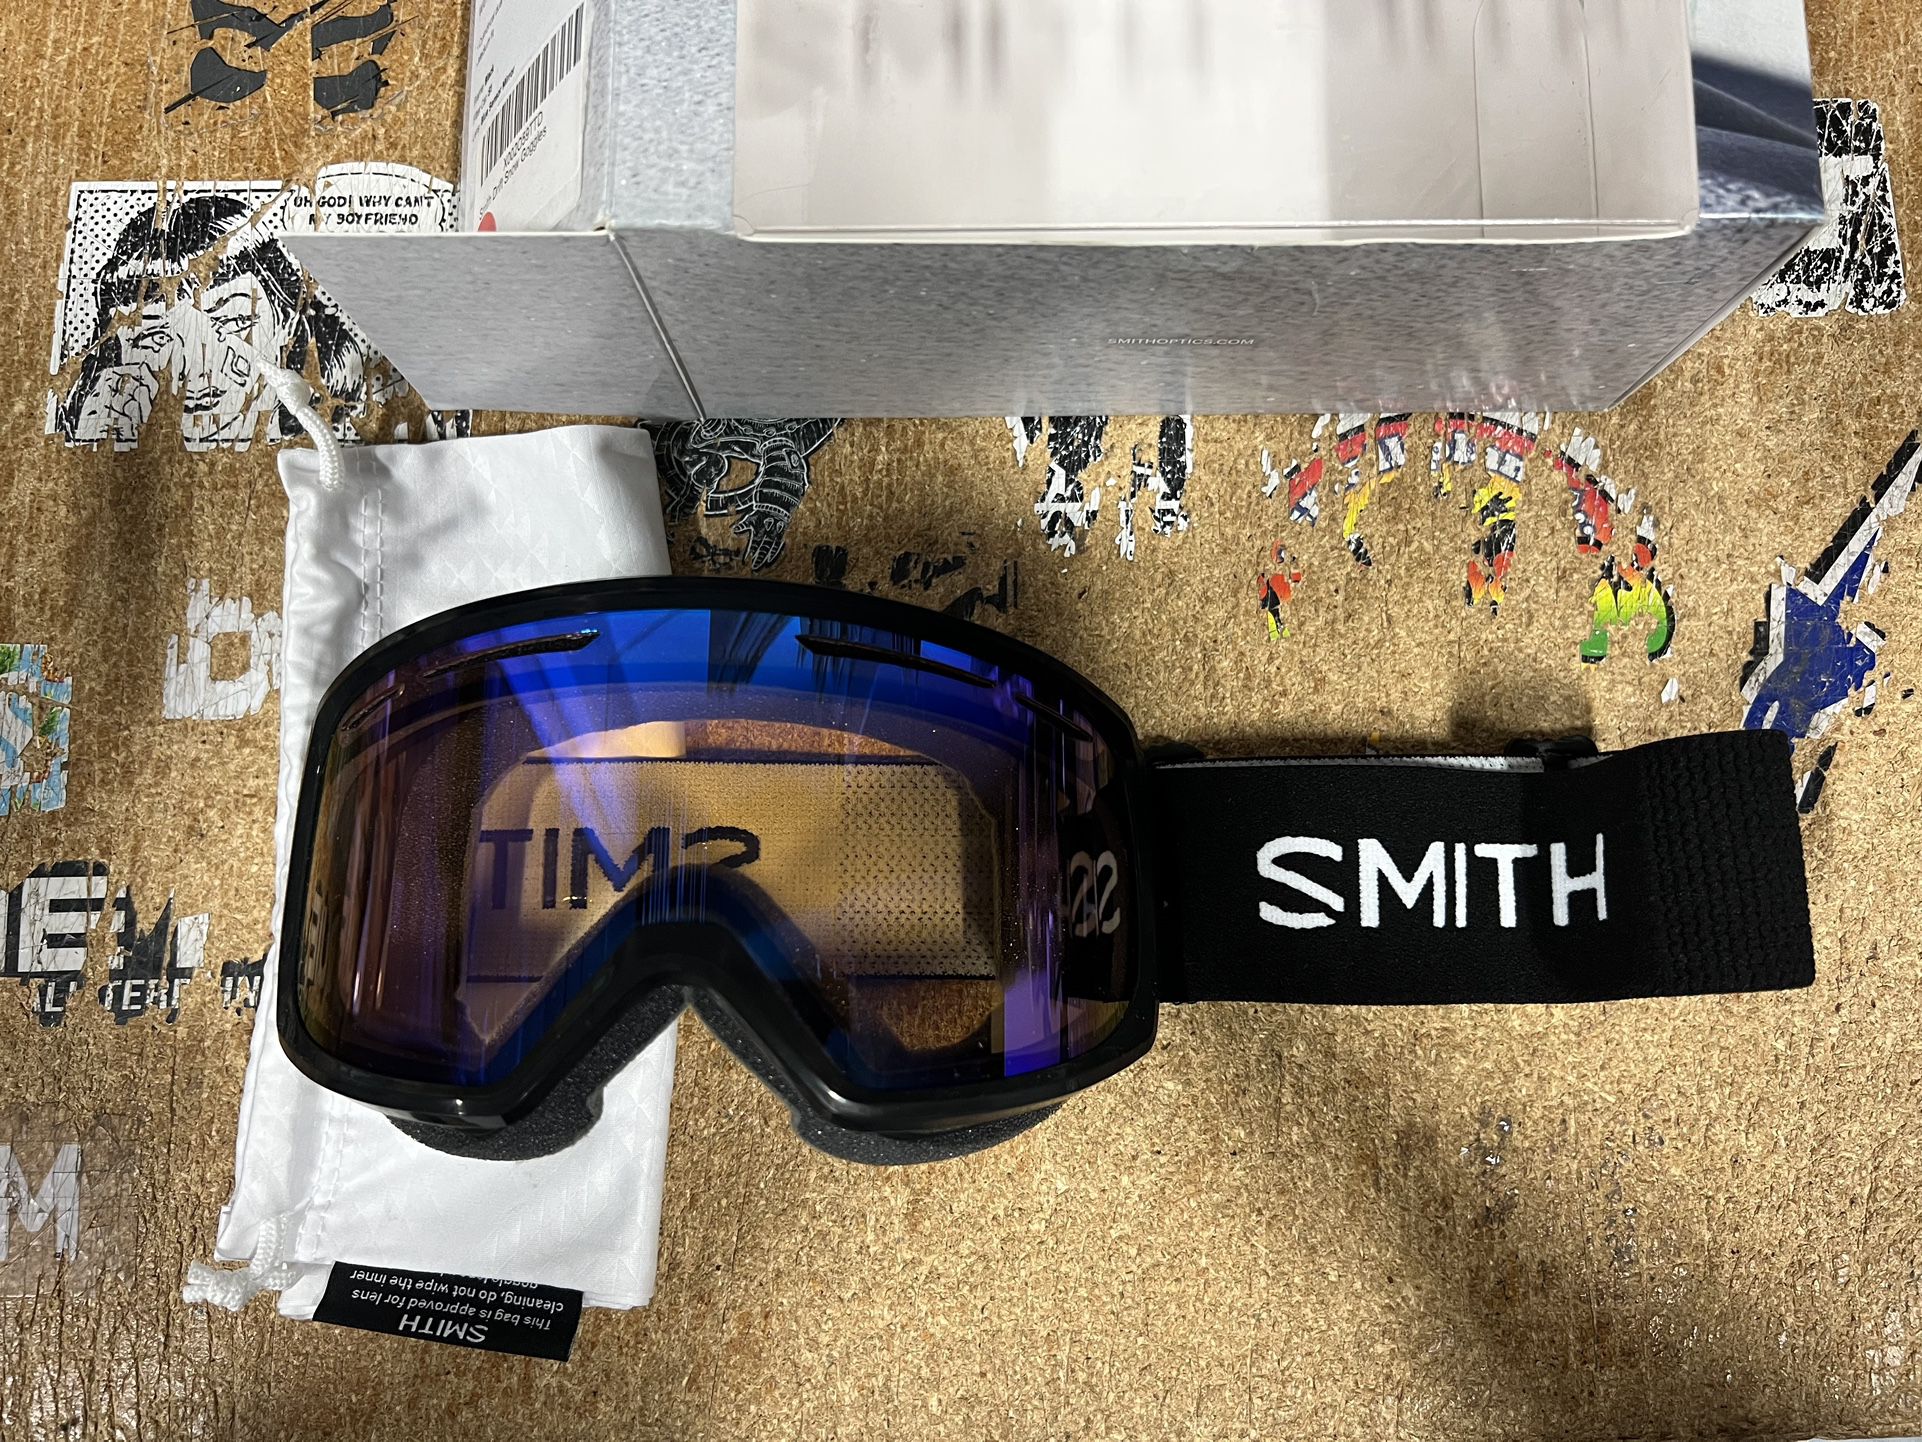 Smith Drift Winter Goggles - Black & Blue Mirror Lens - Ski Snowboard Winter Jet Ski